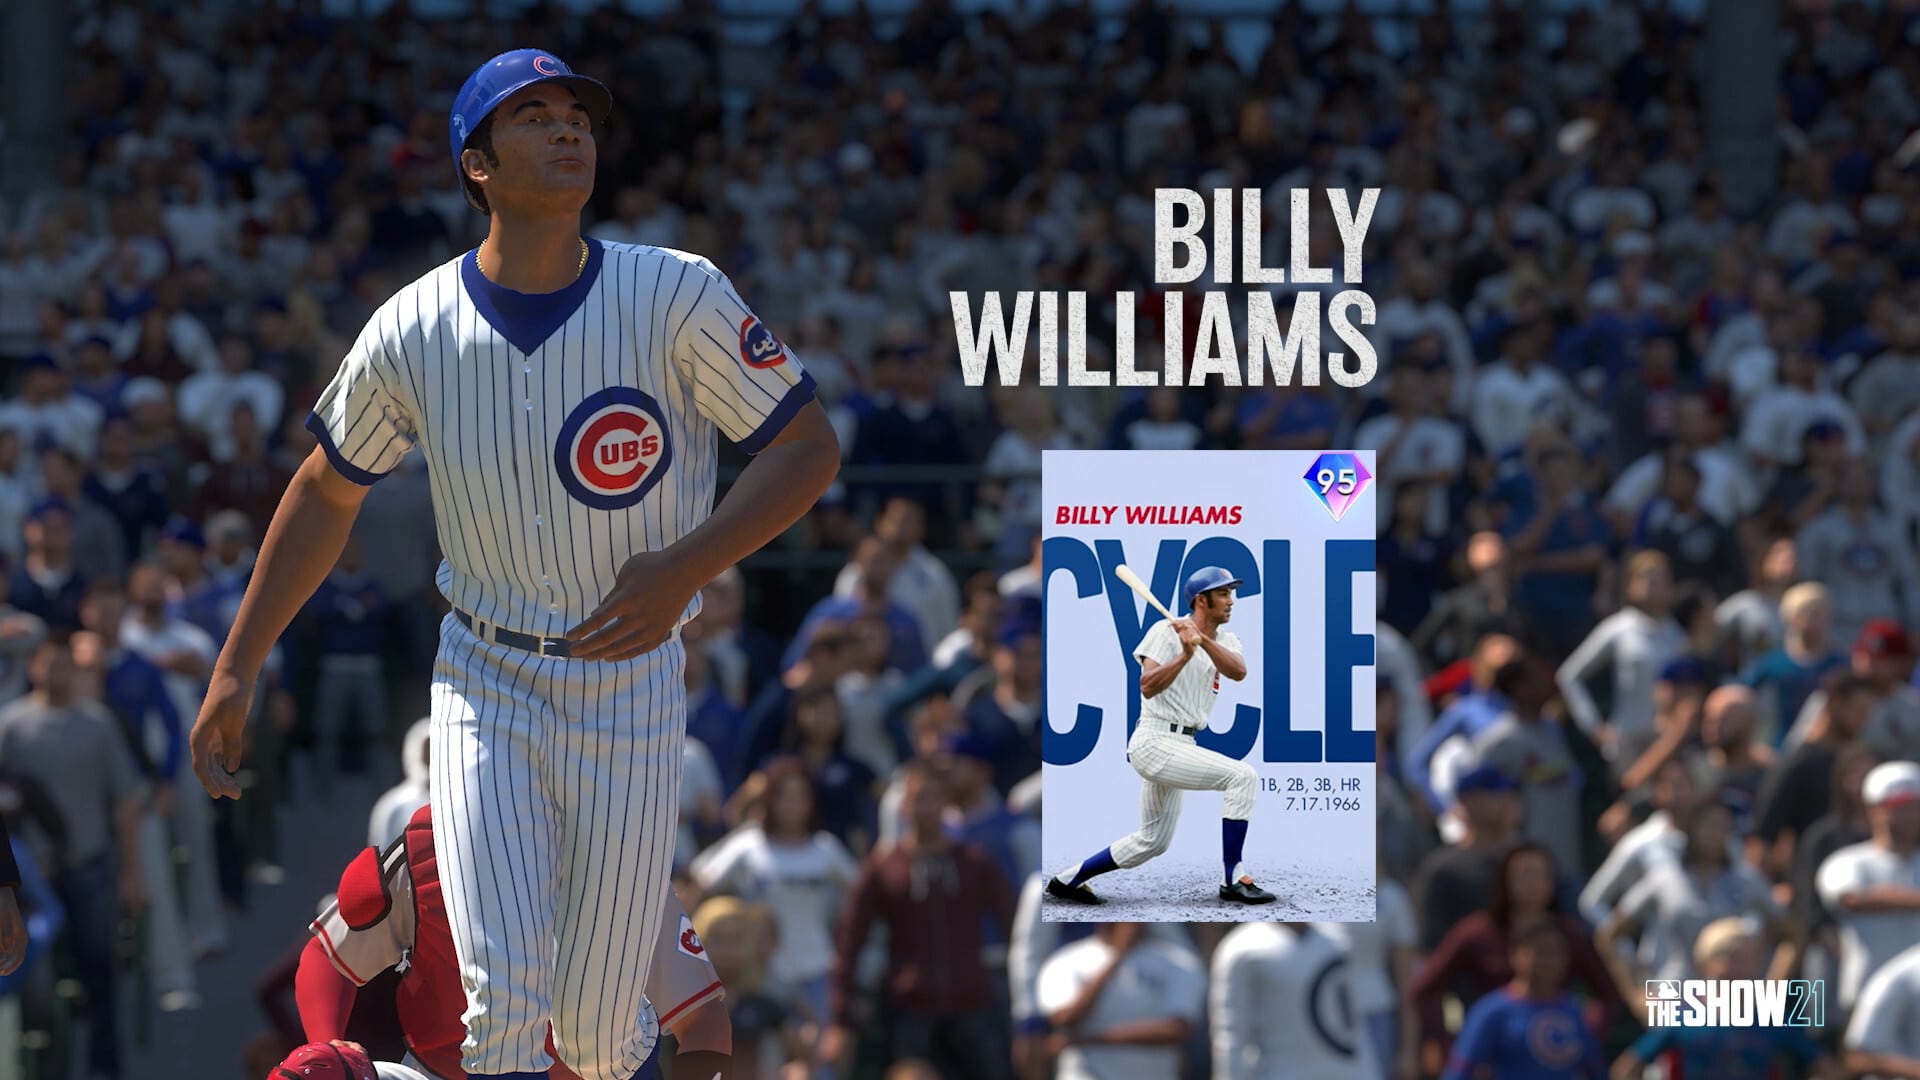 Major League Baseball Players Association - Billy Williams, the